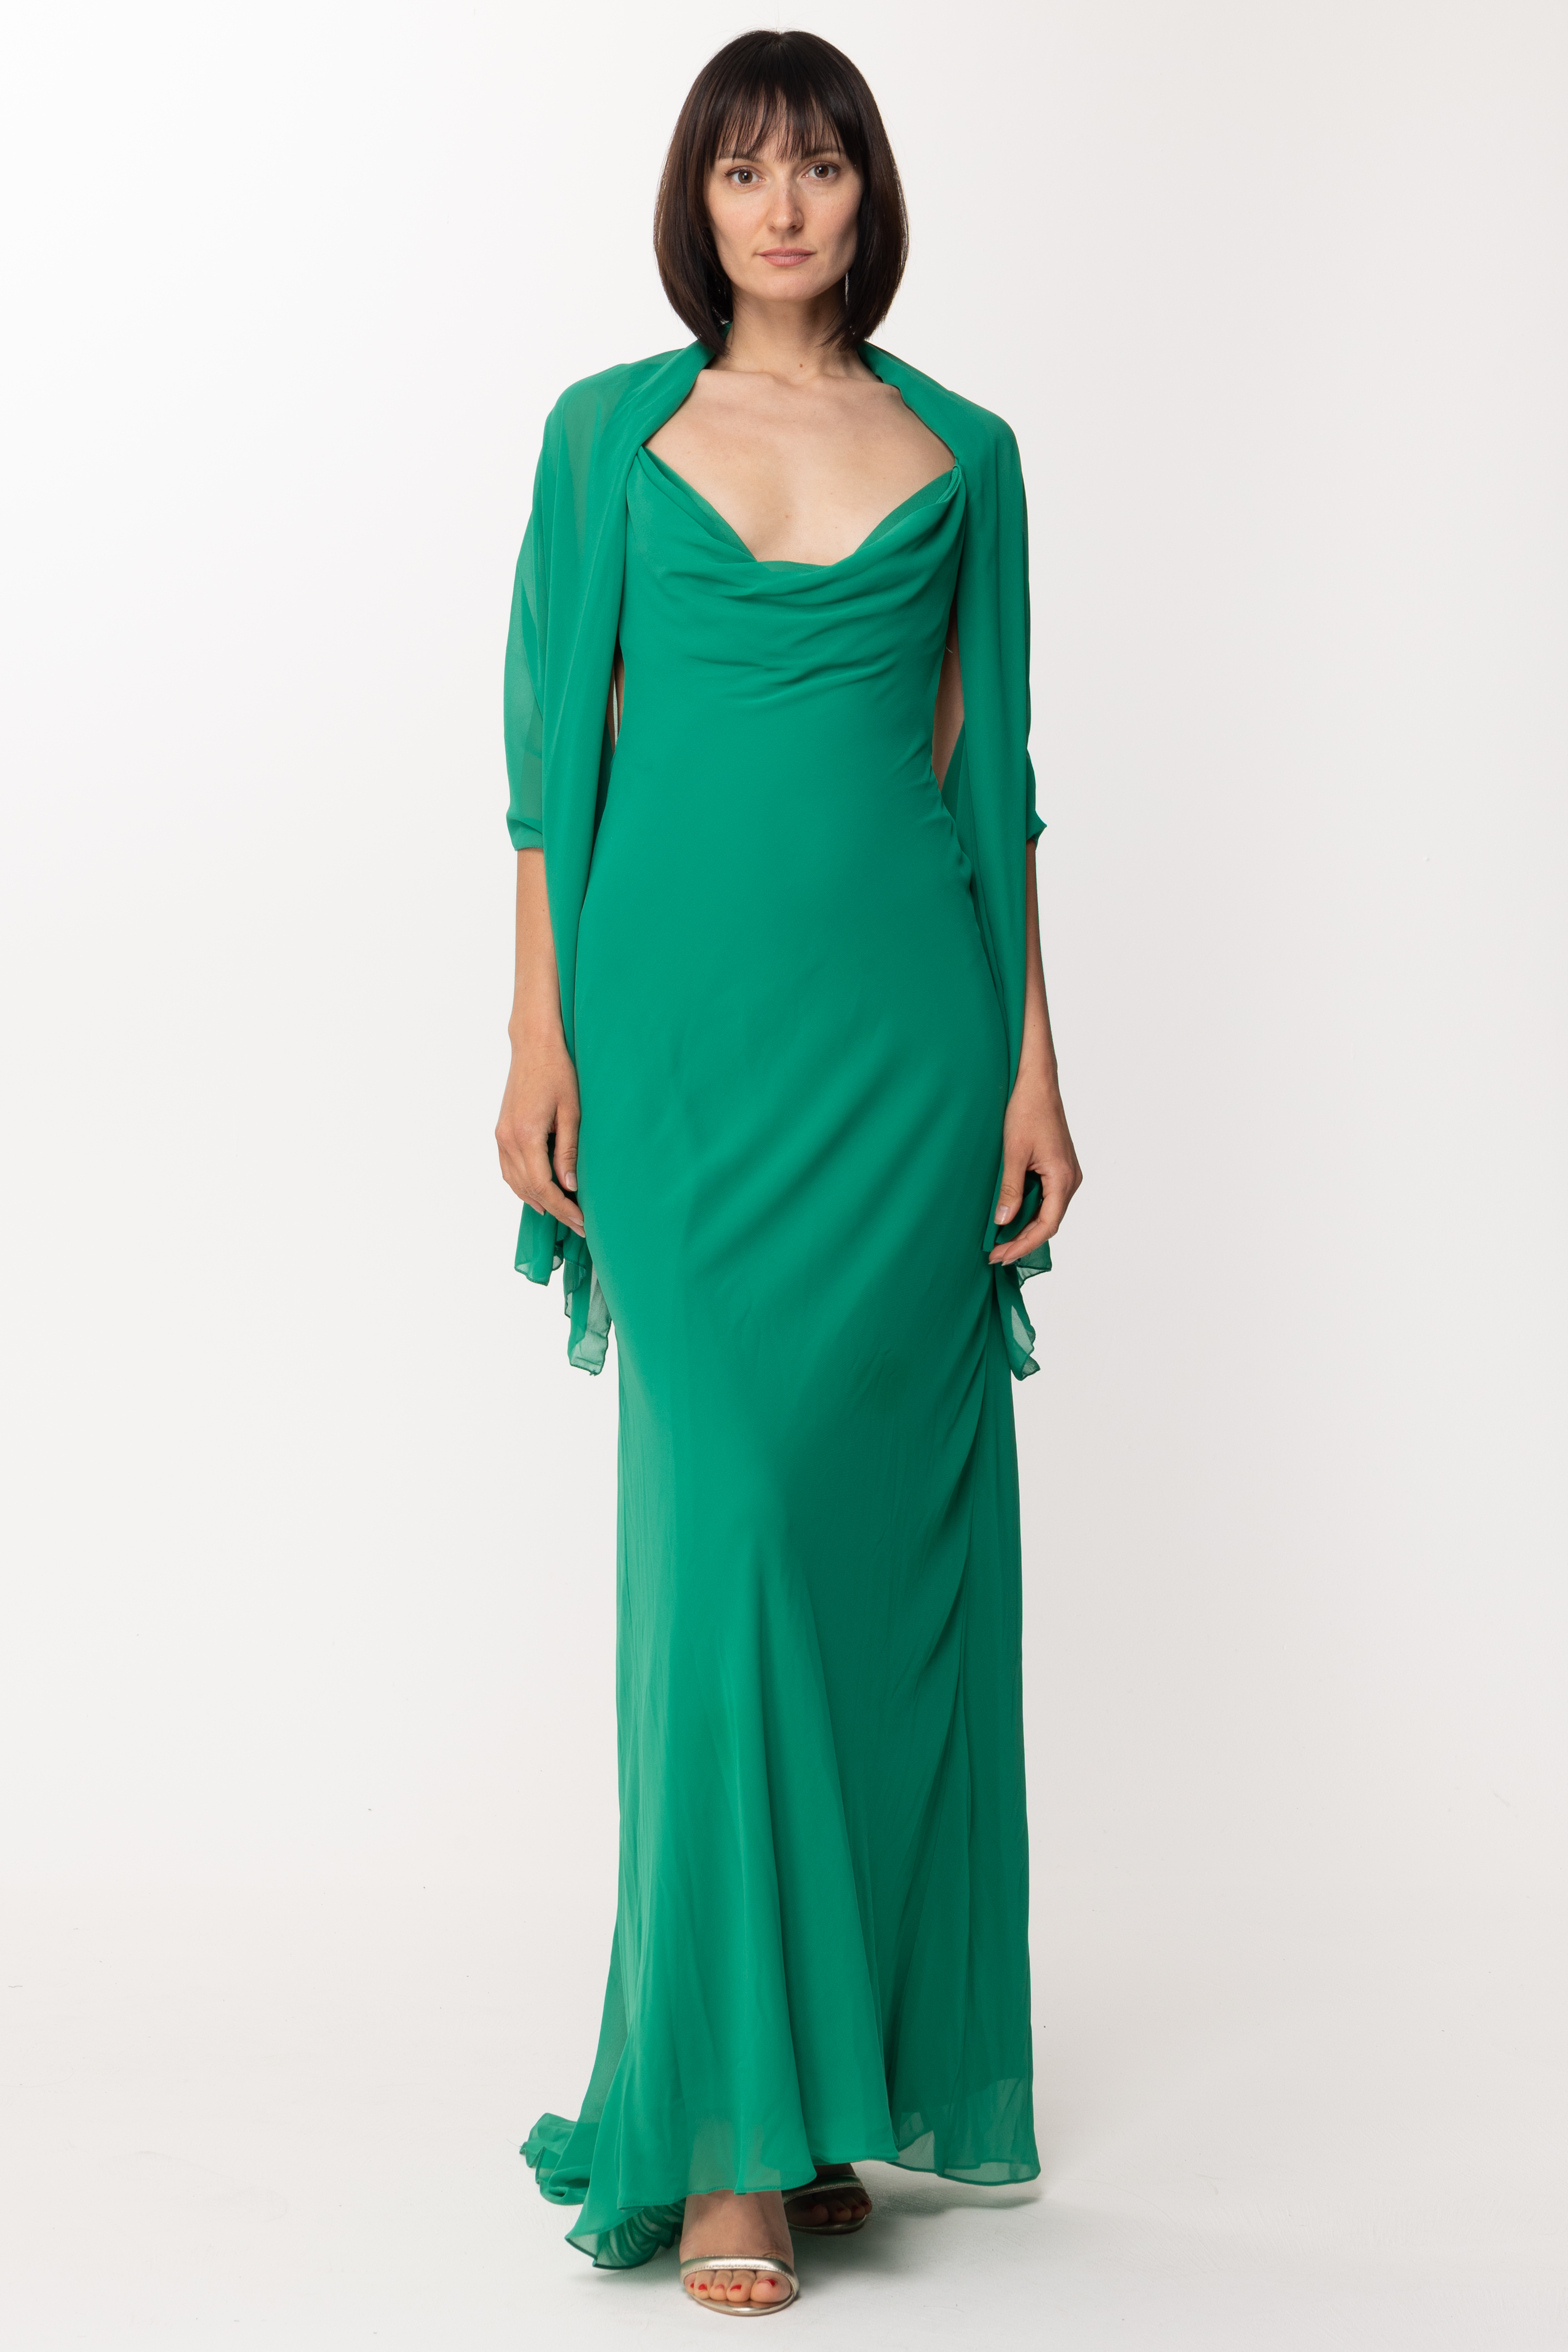 Preview: Fabiana Ferri Flared long dress Verde